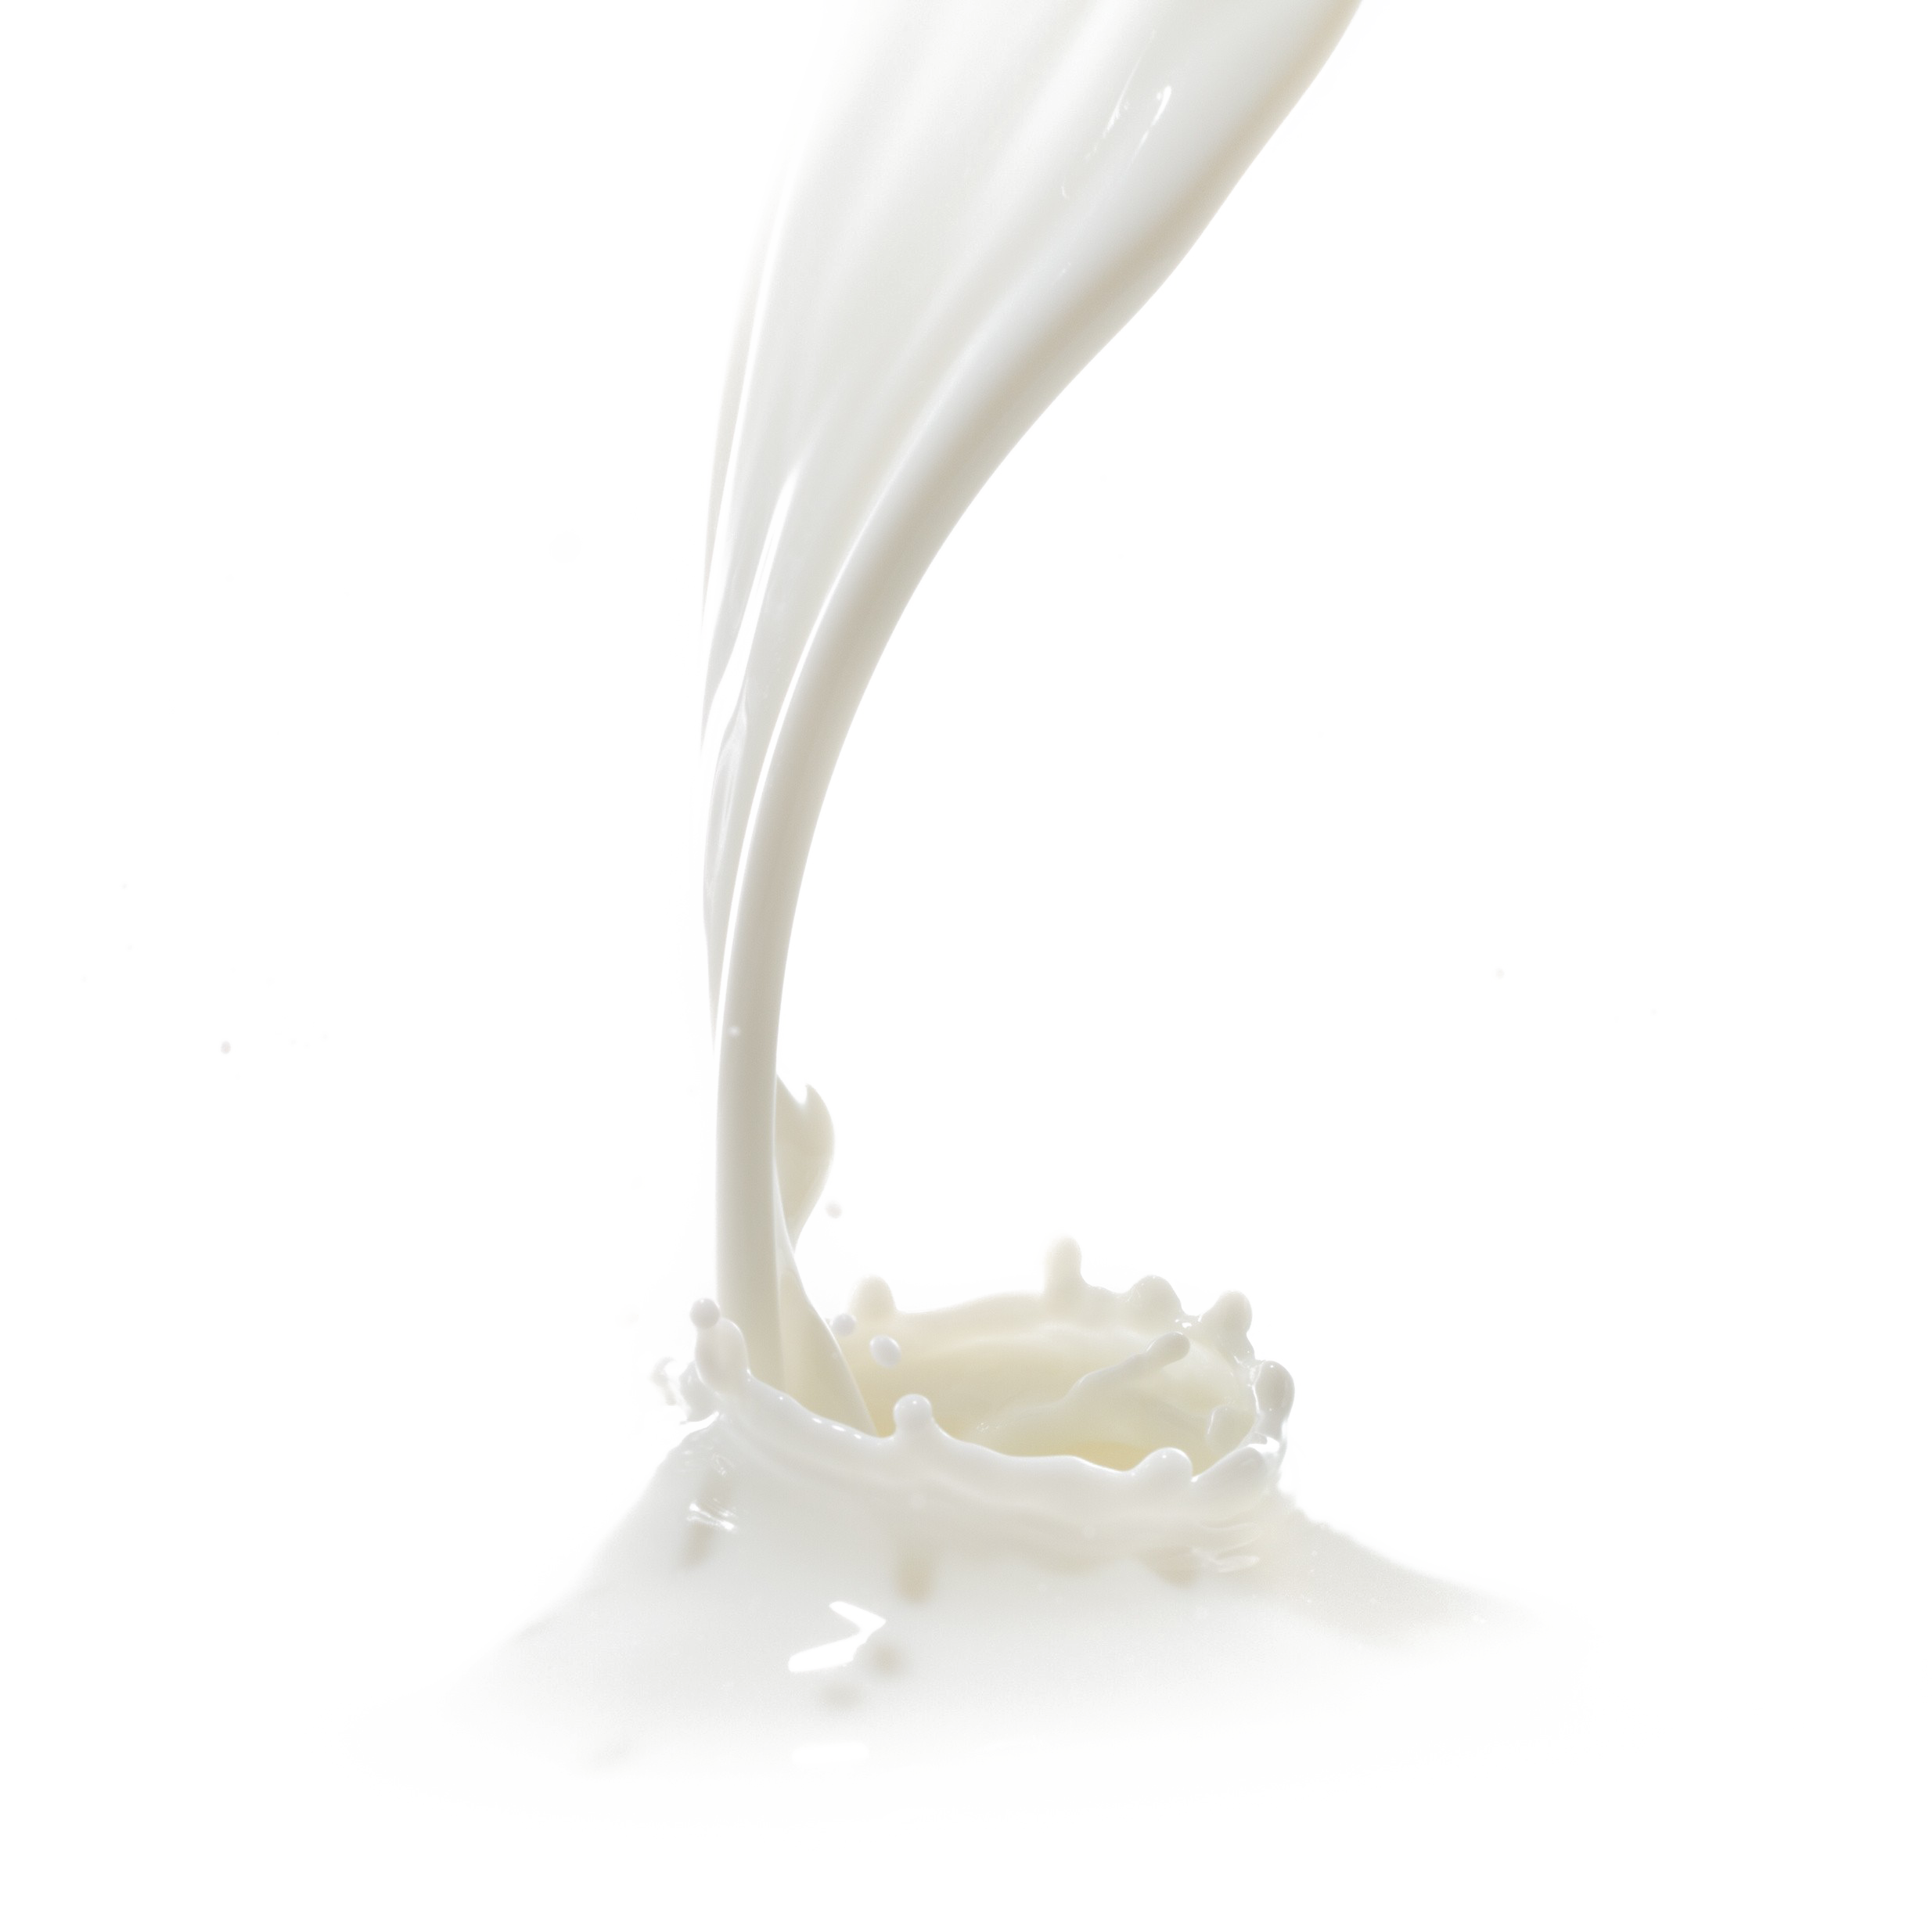 Milk Splash PNG Picture